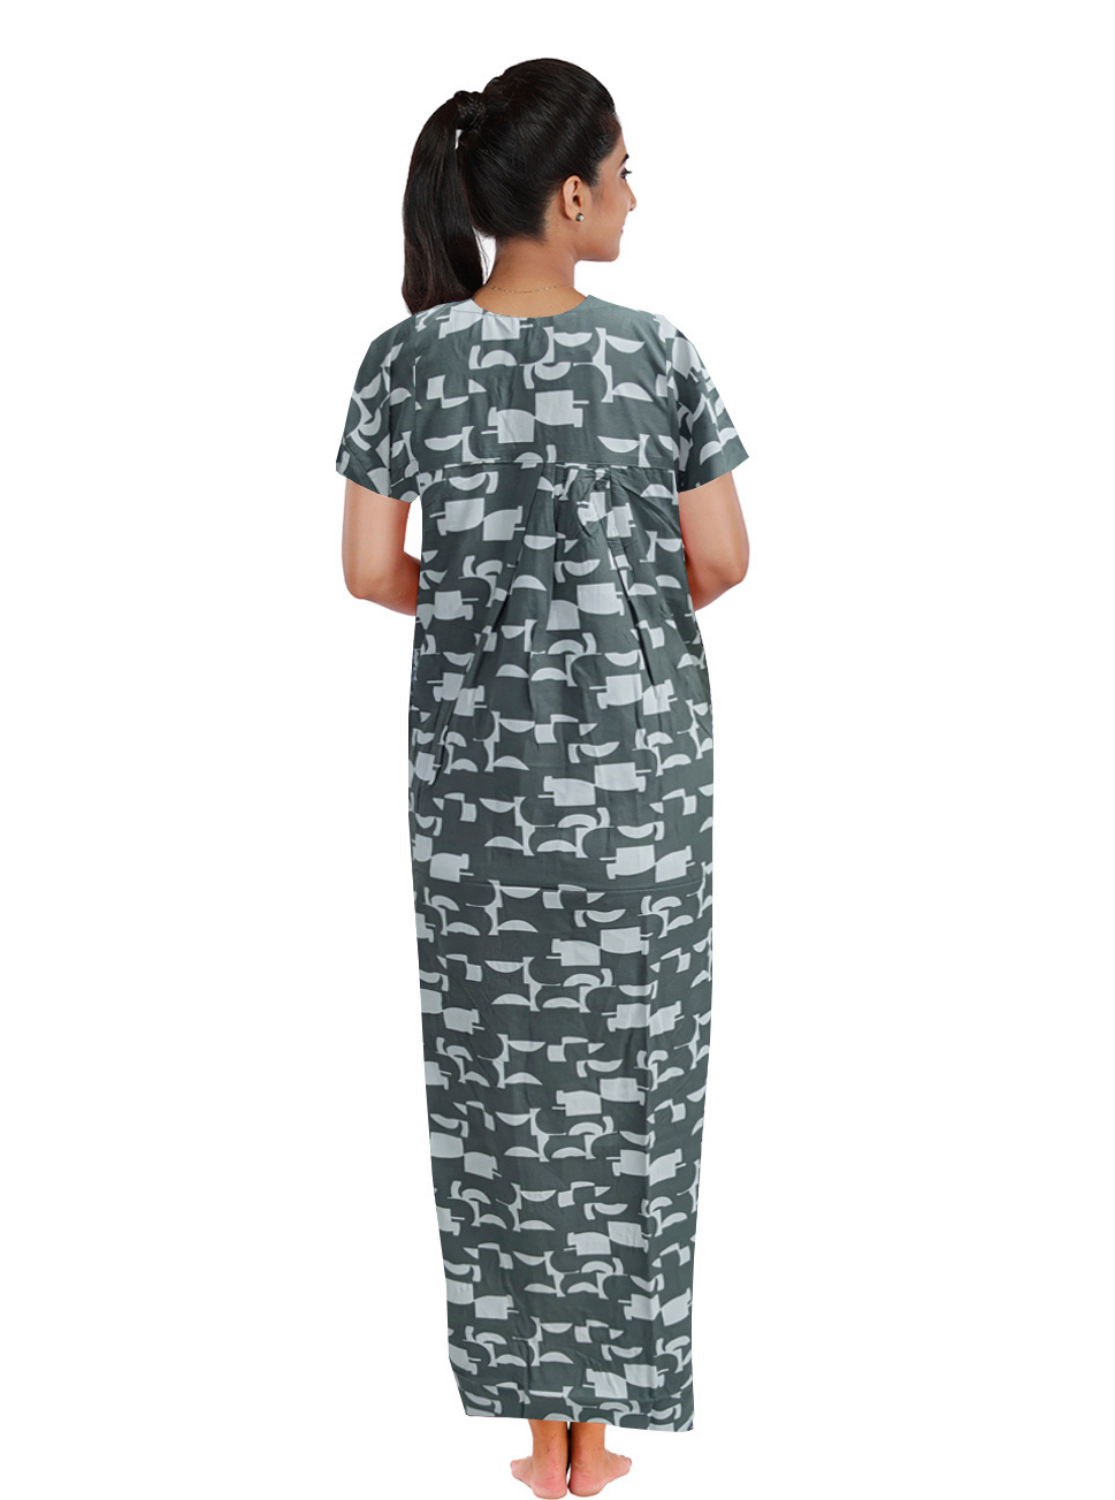 New MANGAI RAYON Pleated Model Nighties - All Over Printed Stylish Nightwear for Stylish Women | Beautiful Nighties for Stylish Women's | Shrinkage Free Rayon Nighties